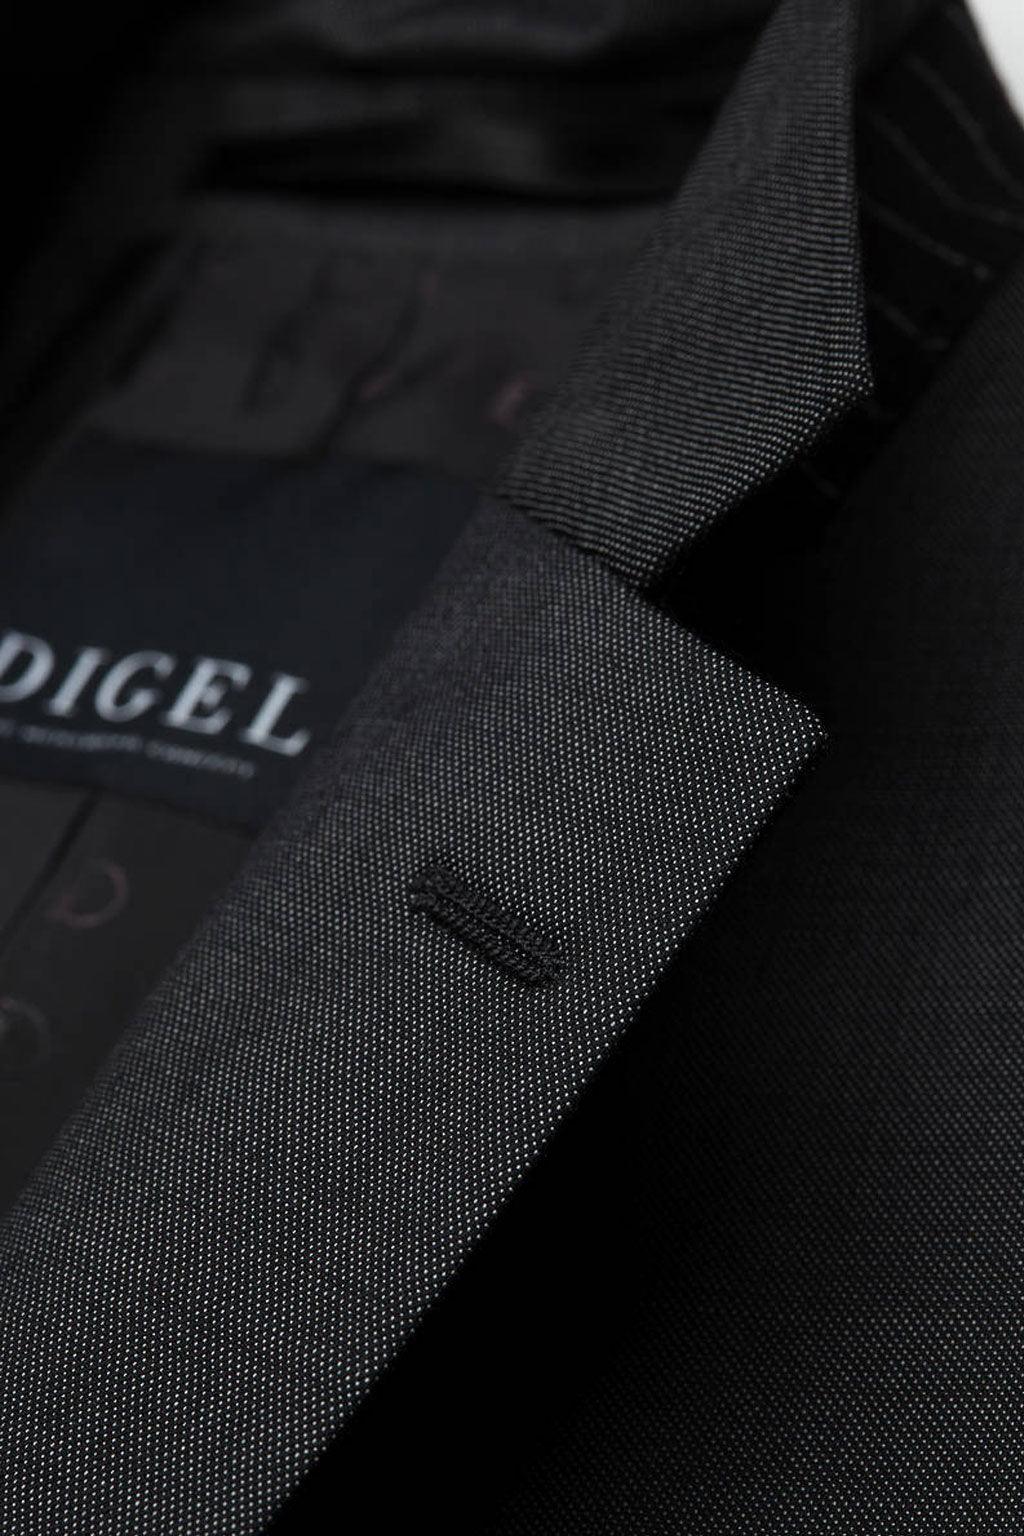 Digel suit | Big Boss | the menswear concept